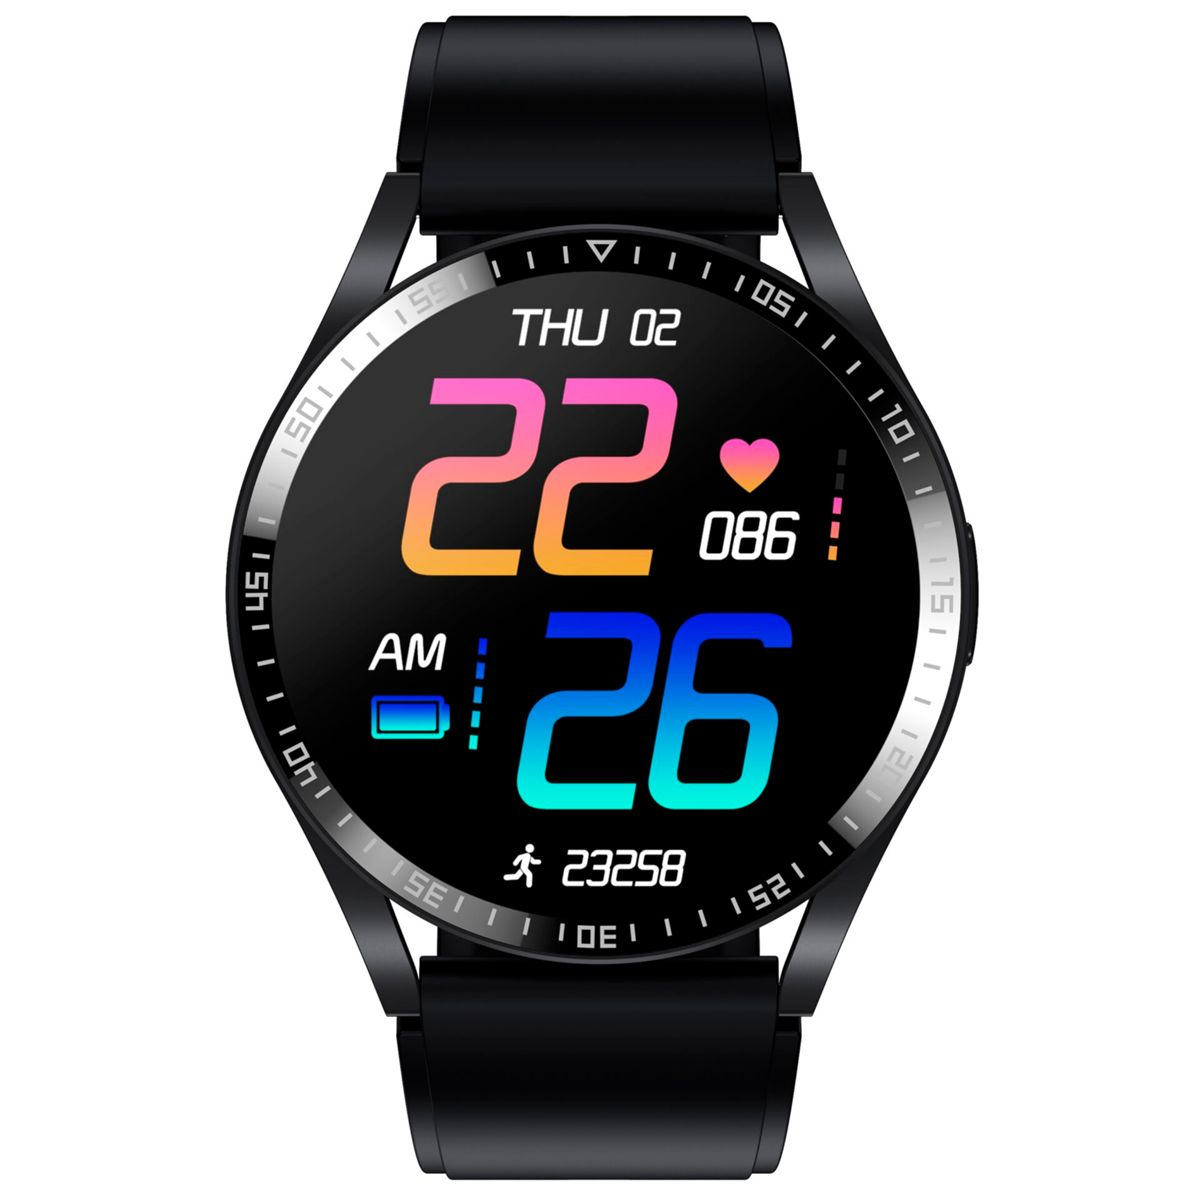 DENVER SWC-372 Smartwatch Kunststoff Kunststoff, schwarz